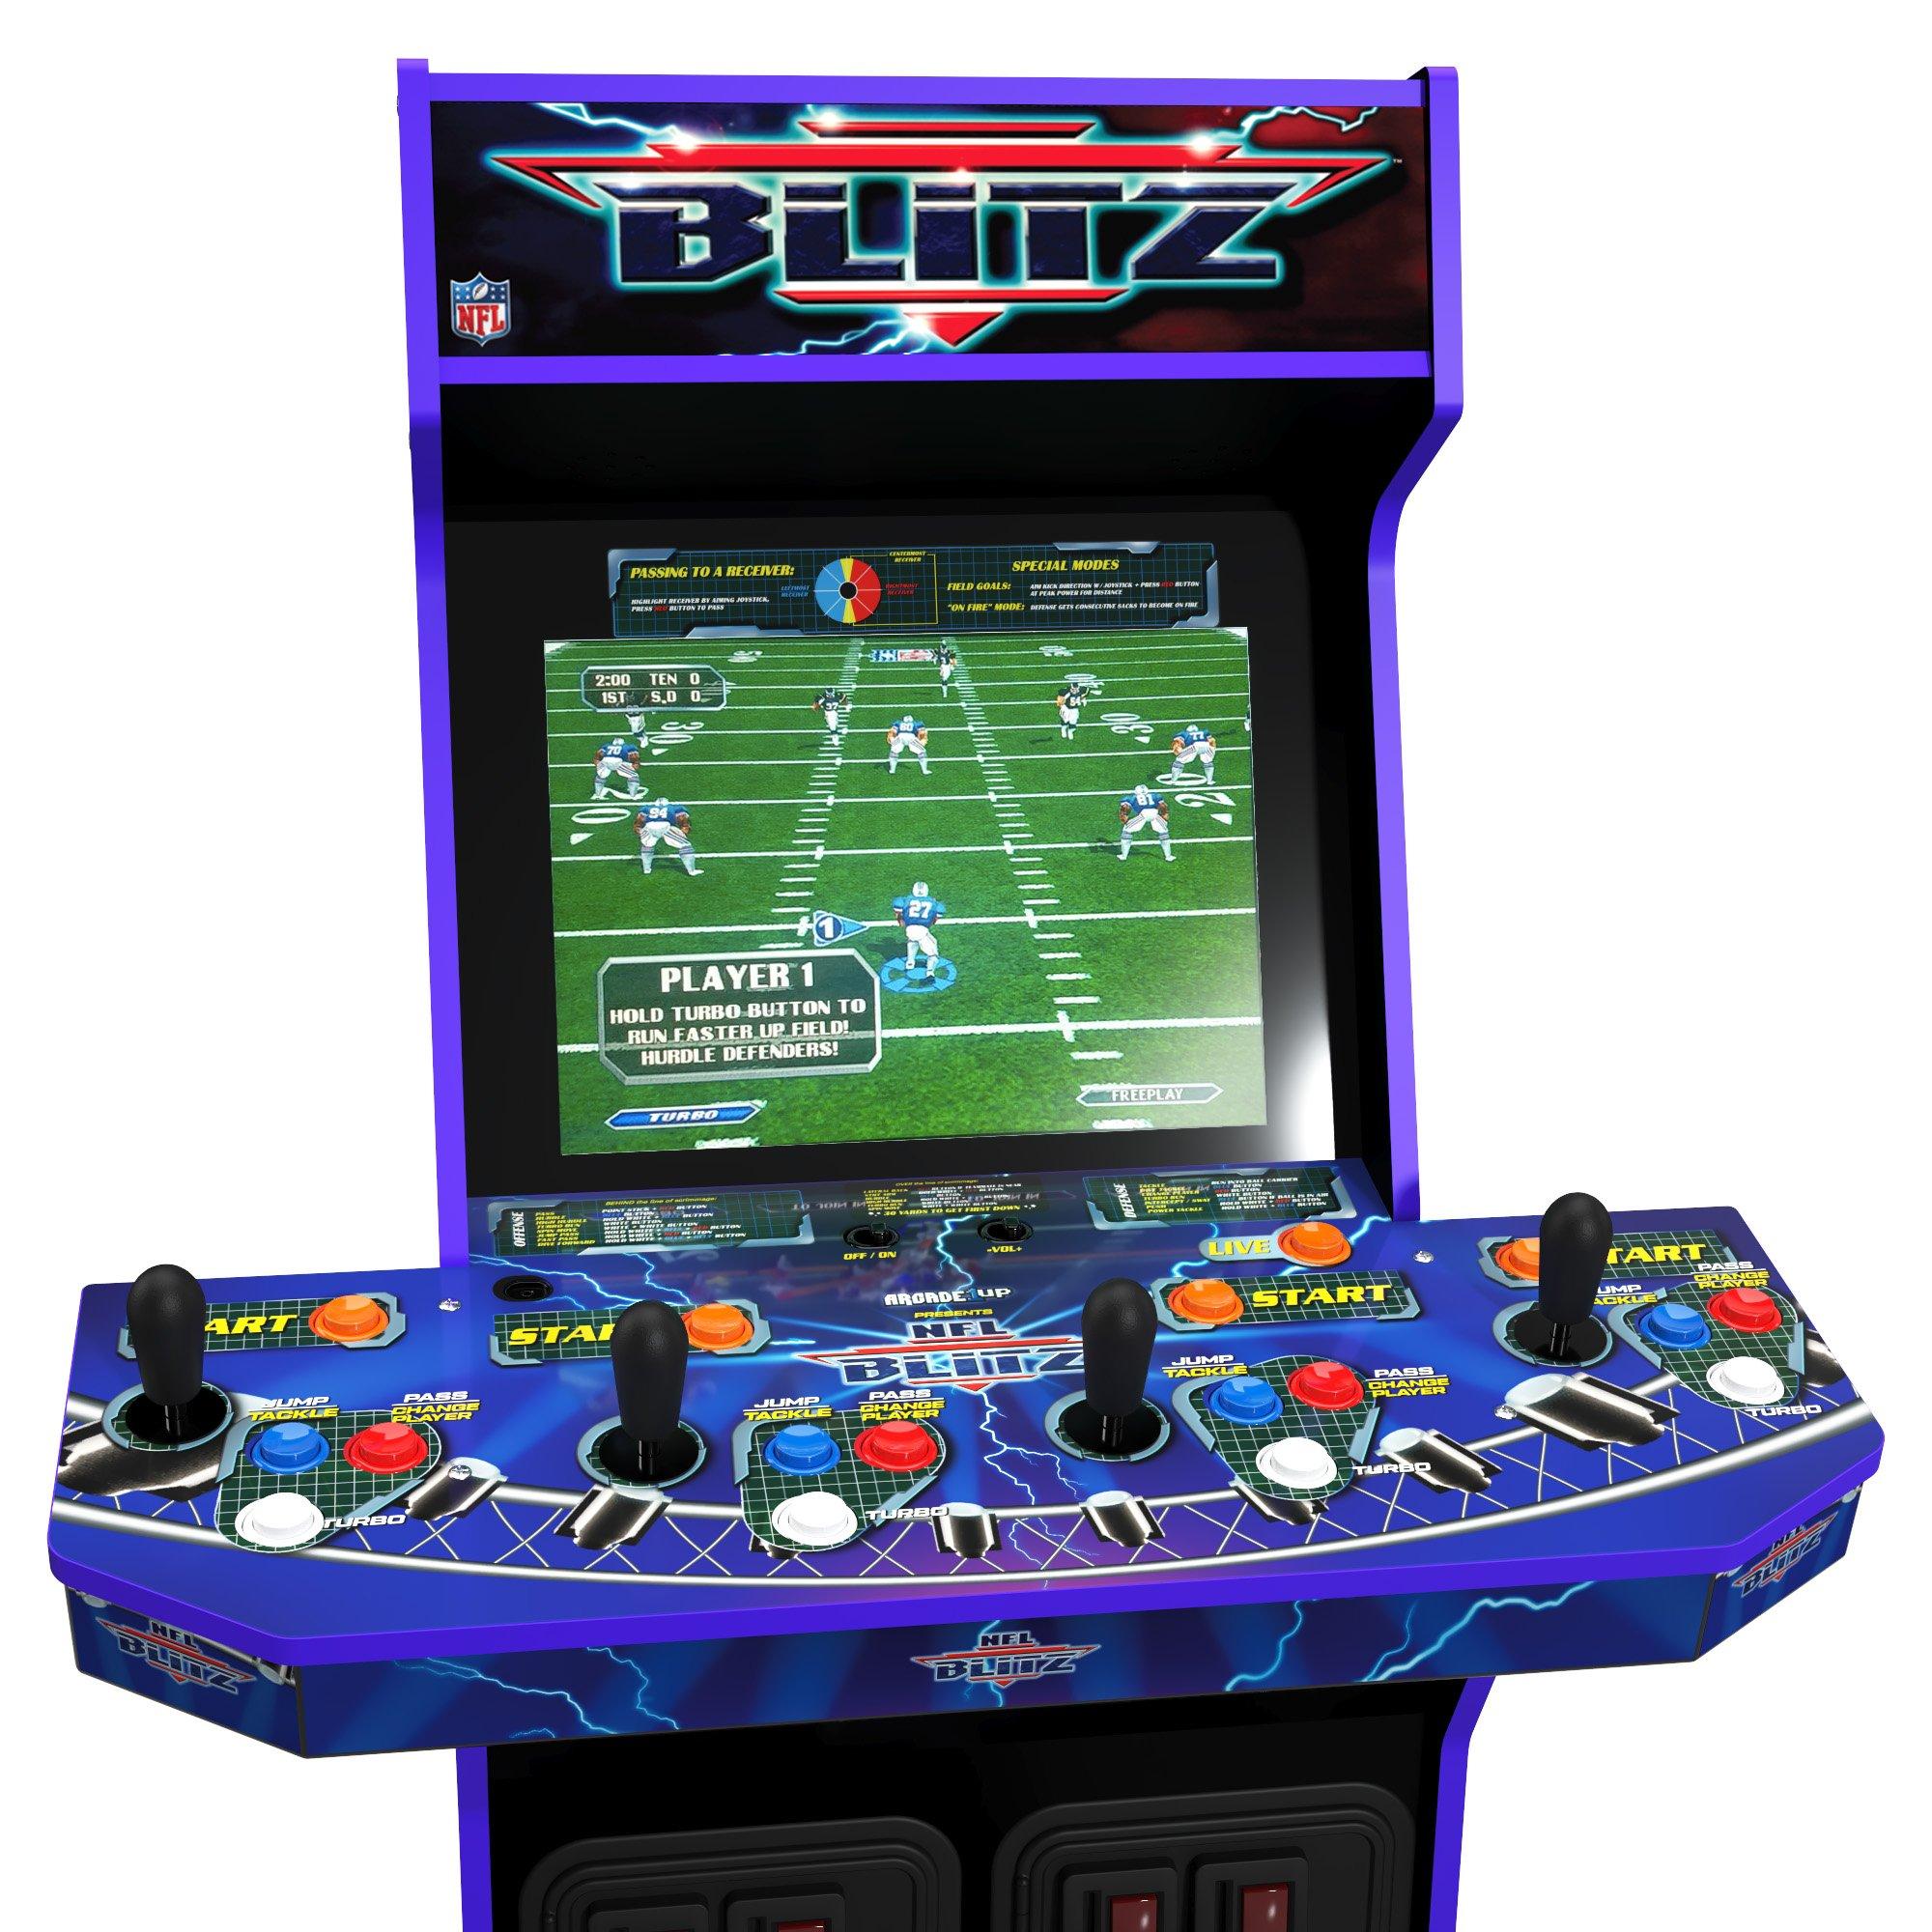 Arcade1Up NFL Blitz Legends Wi-Fi Enabled Arcade Cabinet